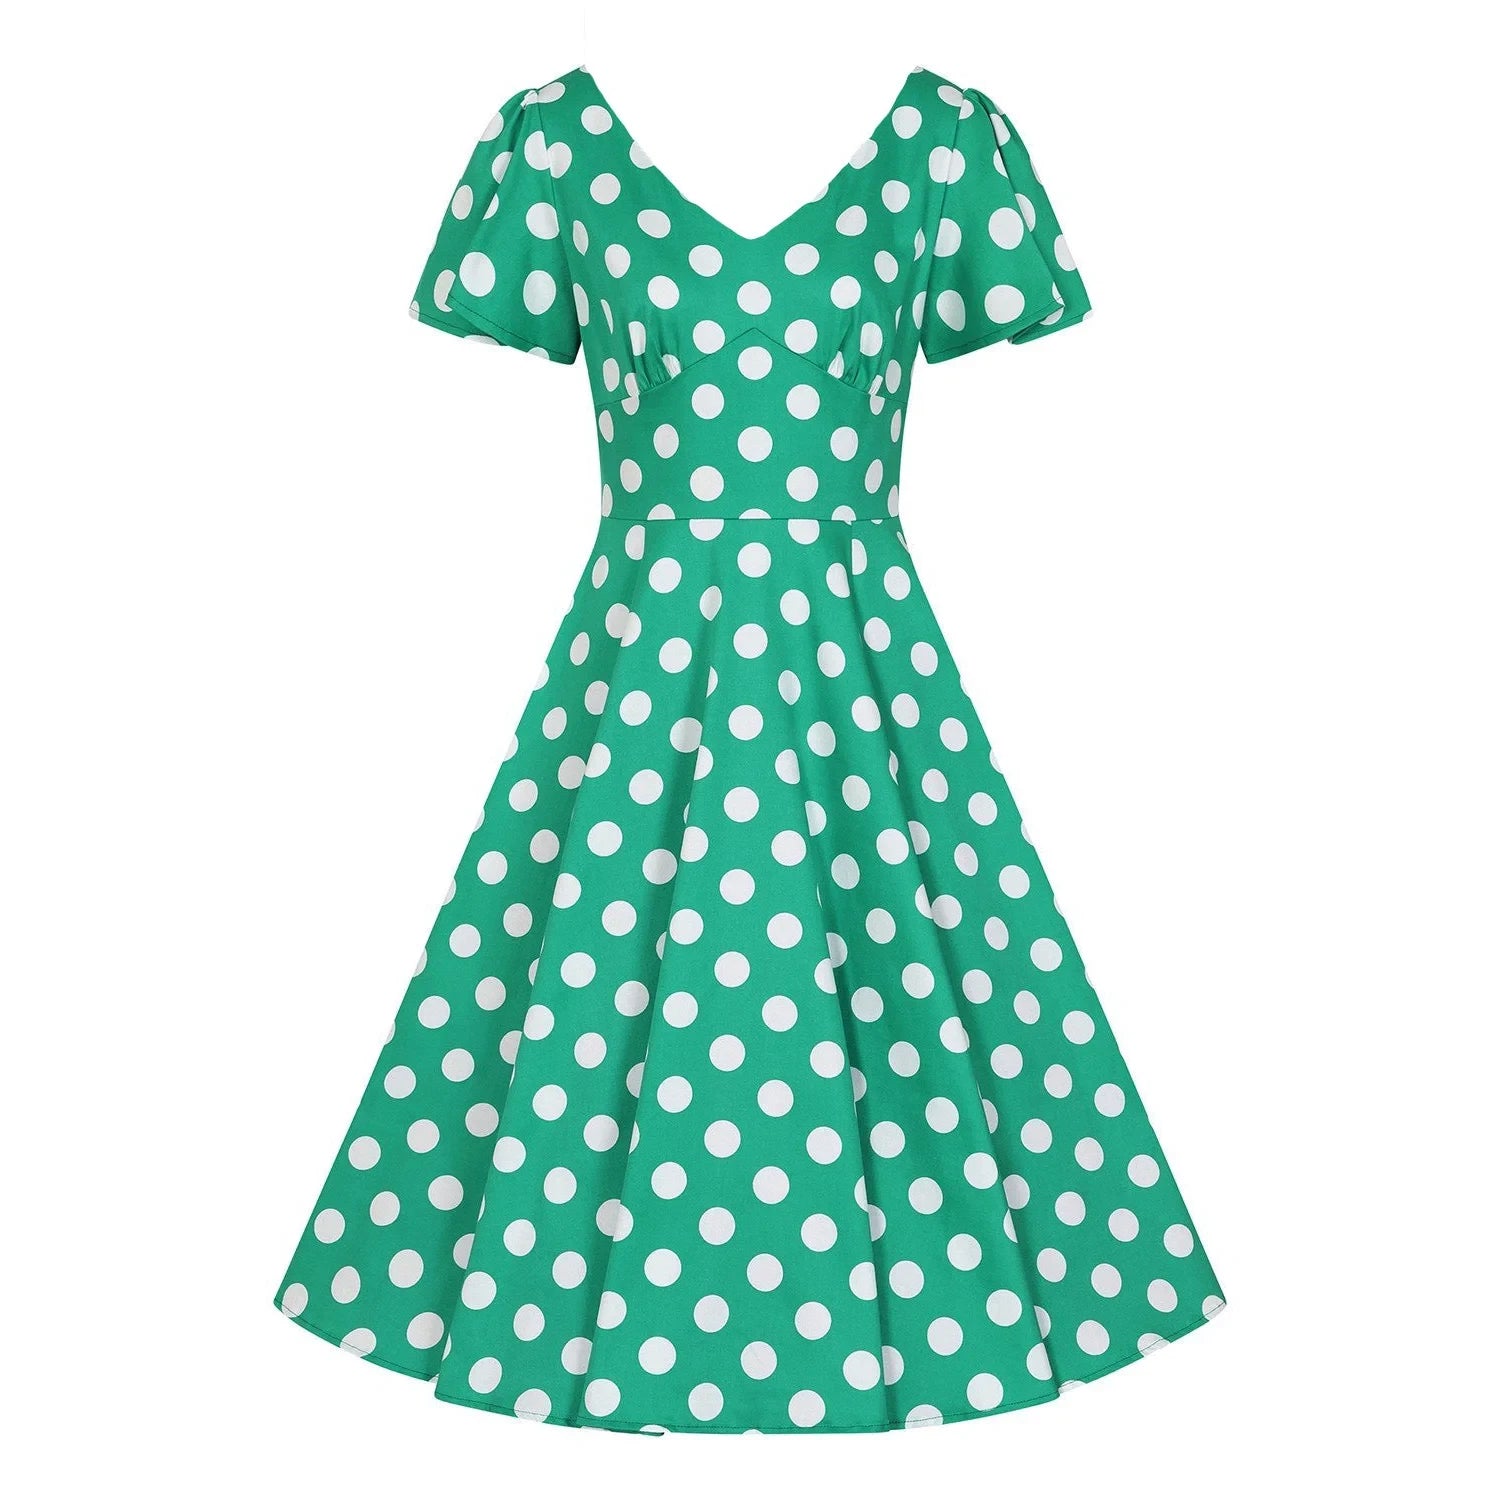 Buy 3NH® Floral Print Women Summer Dress Hepburn Retro Swing Vintage Dress  A-Line Party Dresses With Belt Jurken Pl Size : Large |22361 at Amazon.in